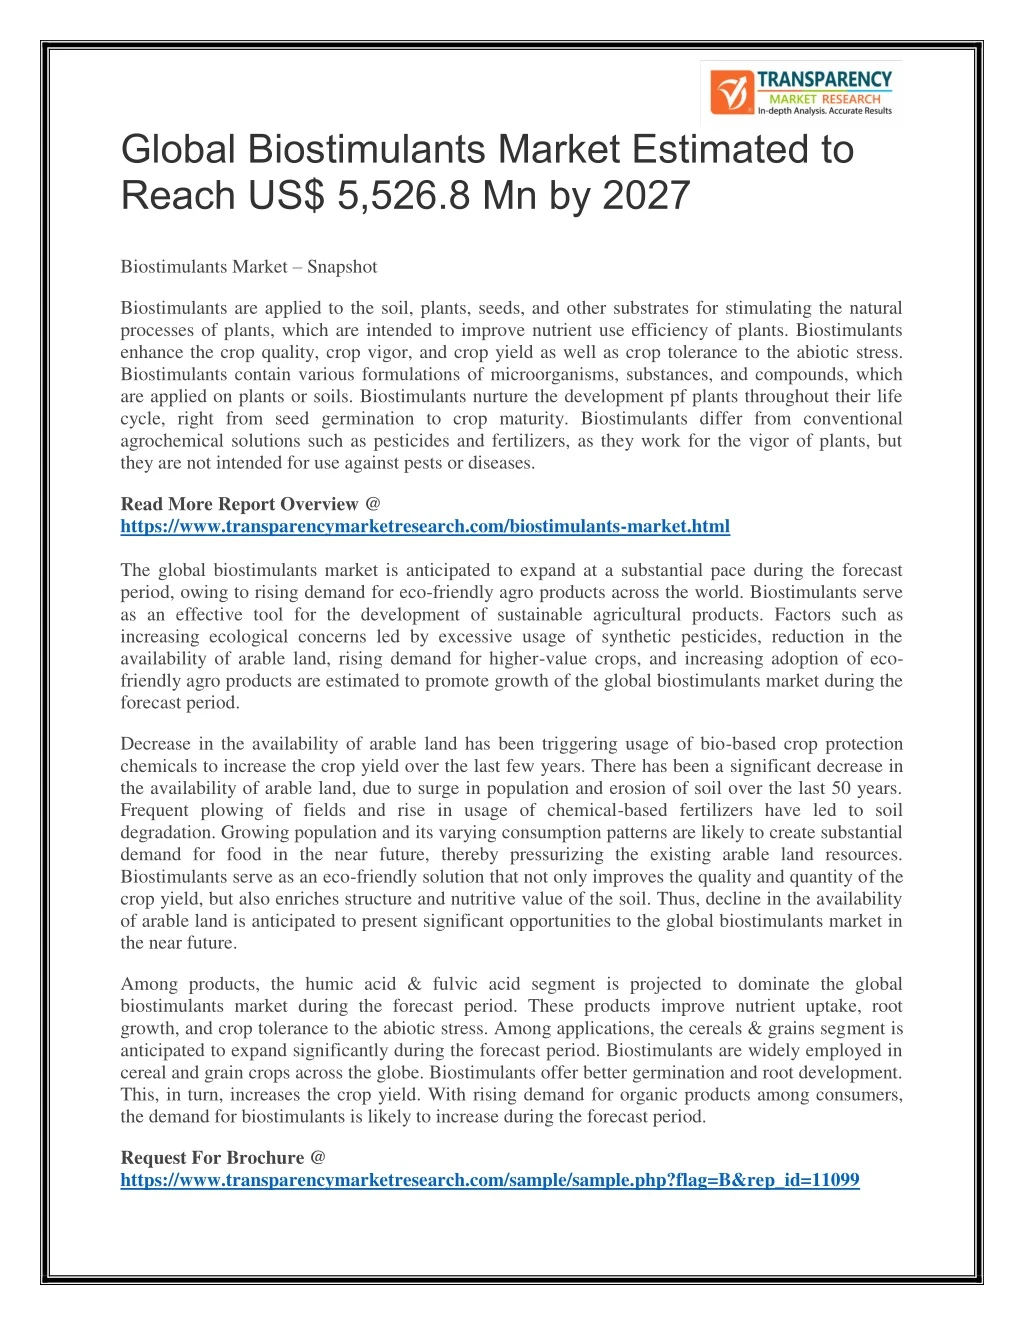 global biostimulants market estimated to reach